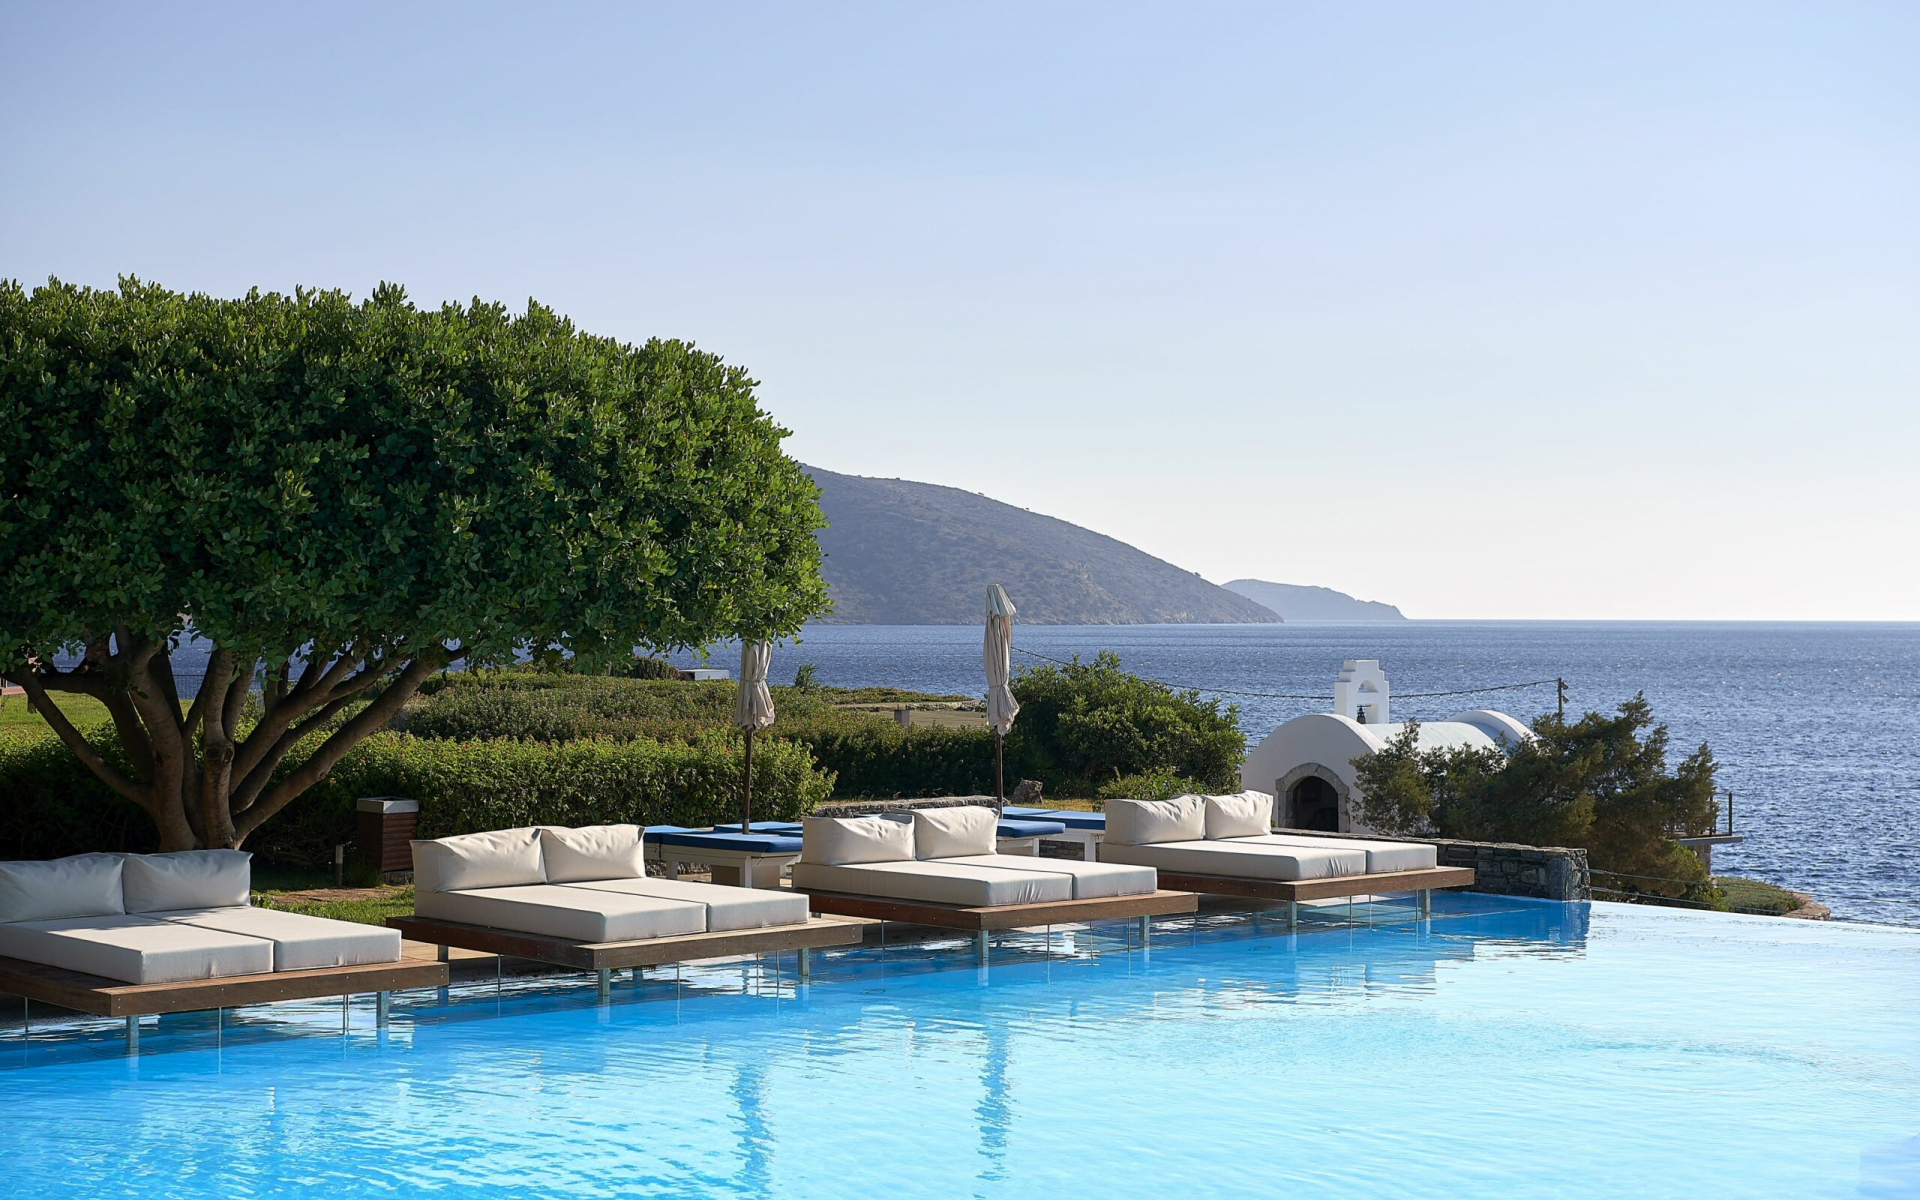 St Nicolas Bay Resort Hotel & Villas Agios Nikolaos Crete